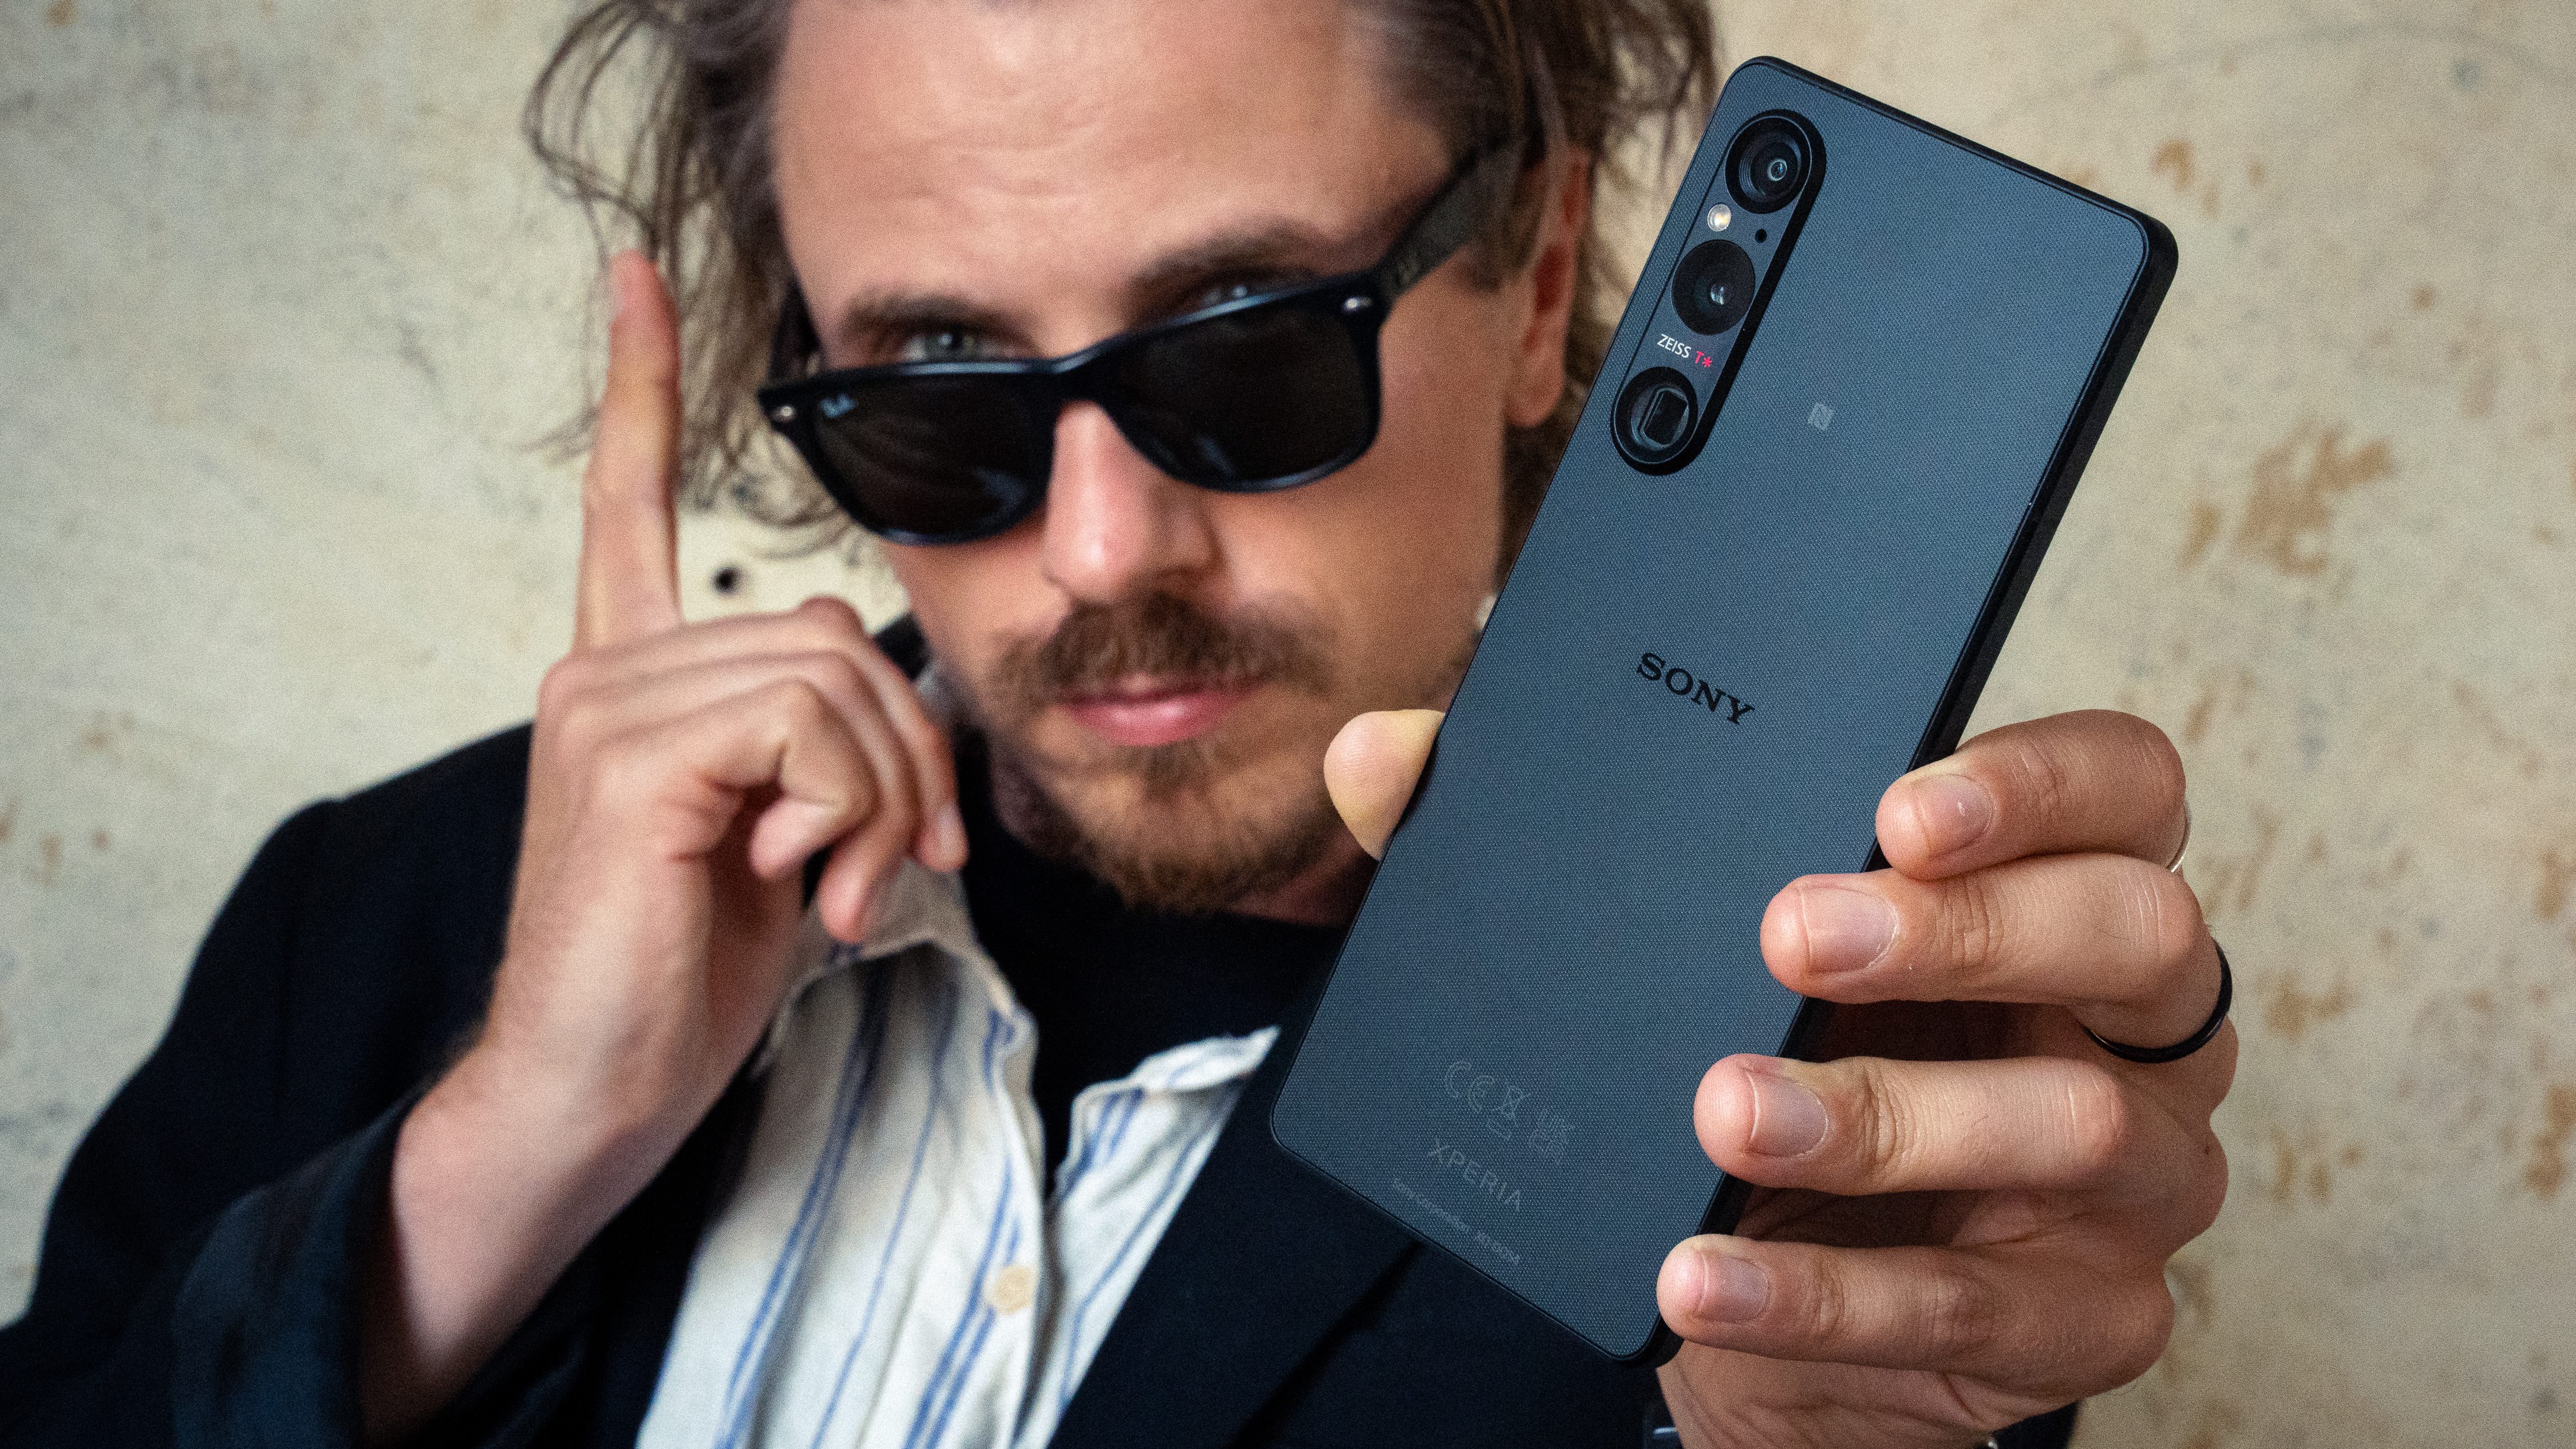 Sony Xperia 1 V ups camera resolution, keeps headphone jack: Leak